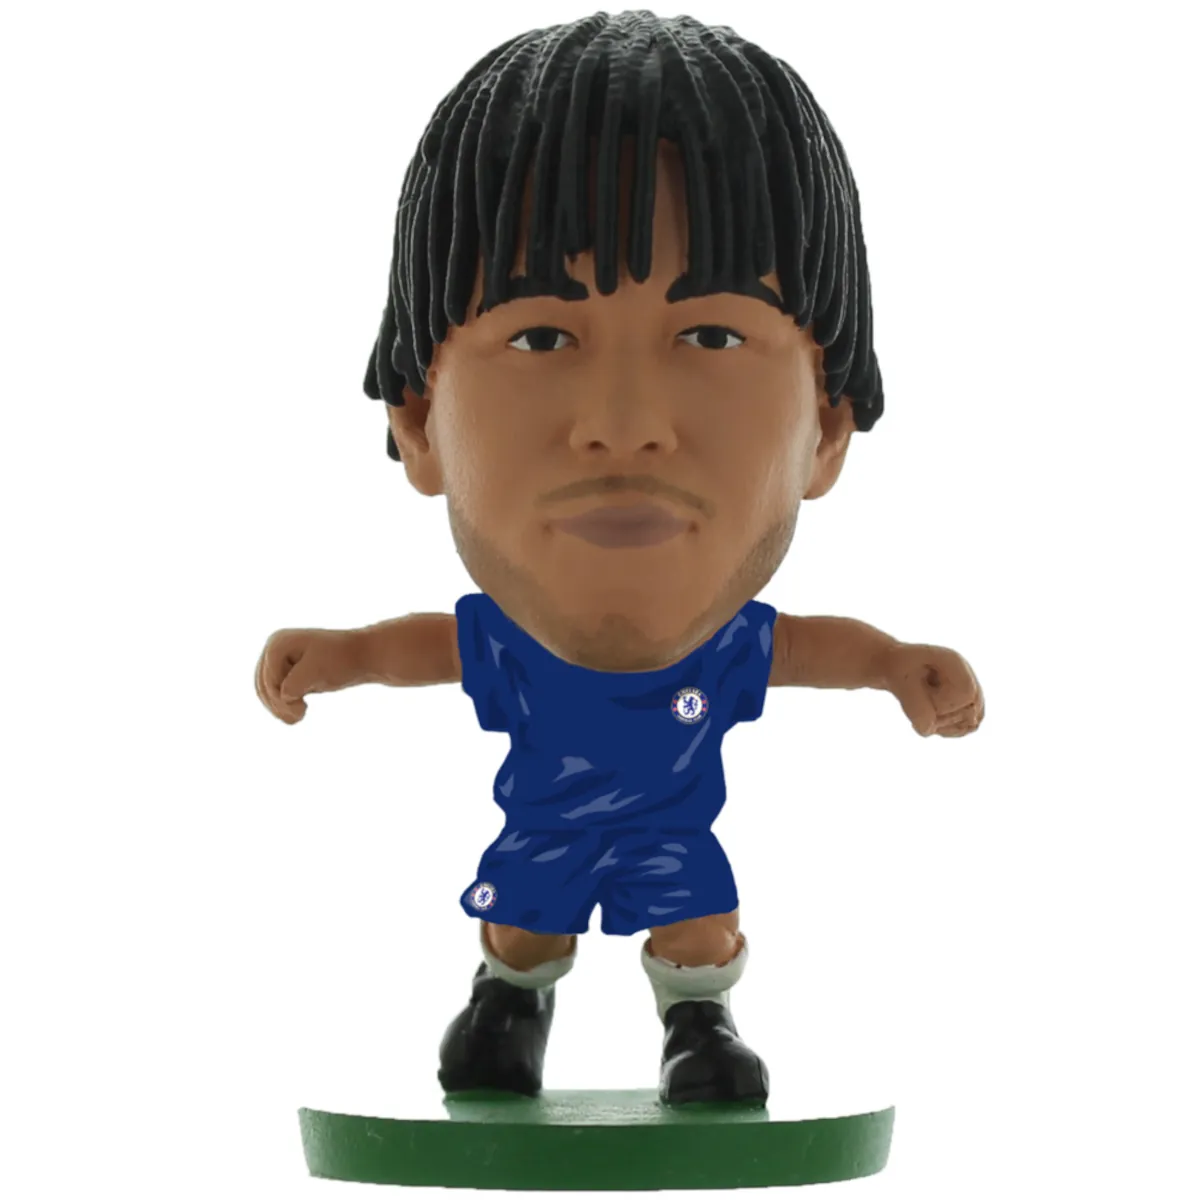 179458 Chelsea FC SoccerStarz Collectable Figure - Reece James